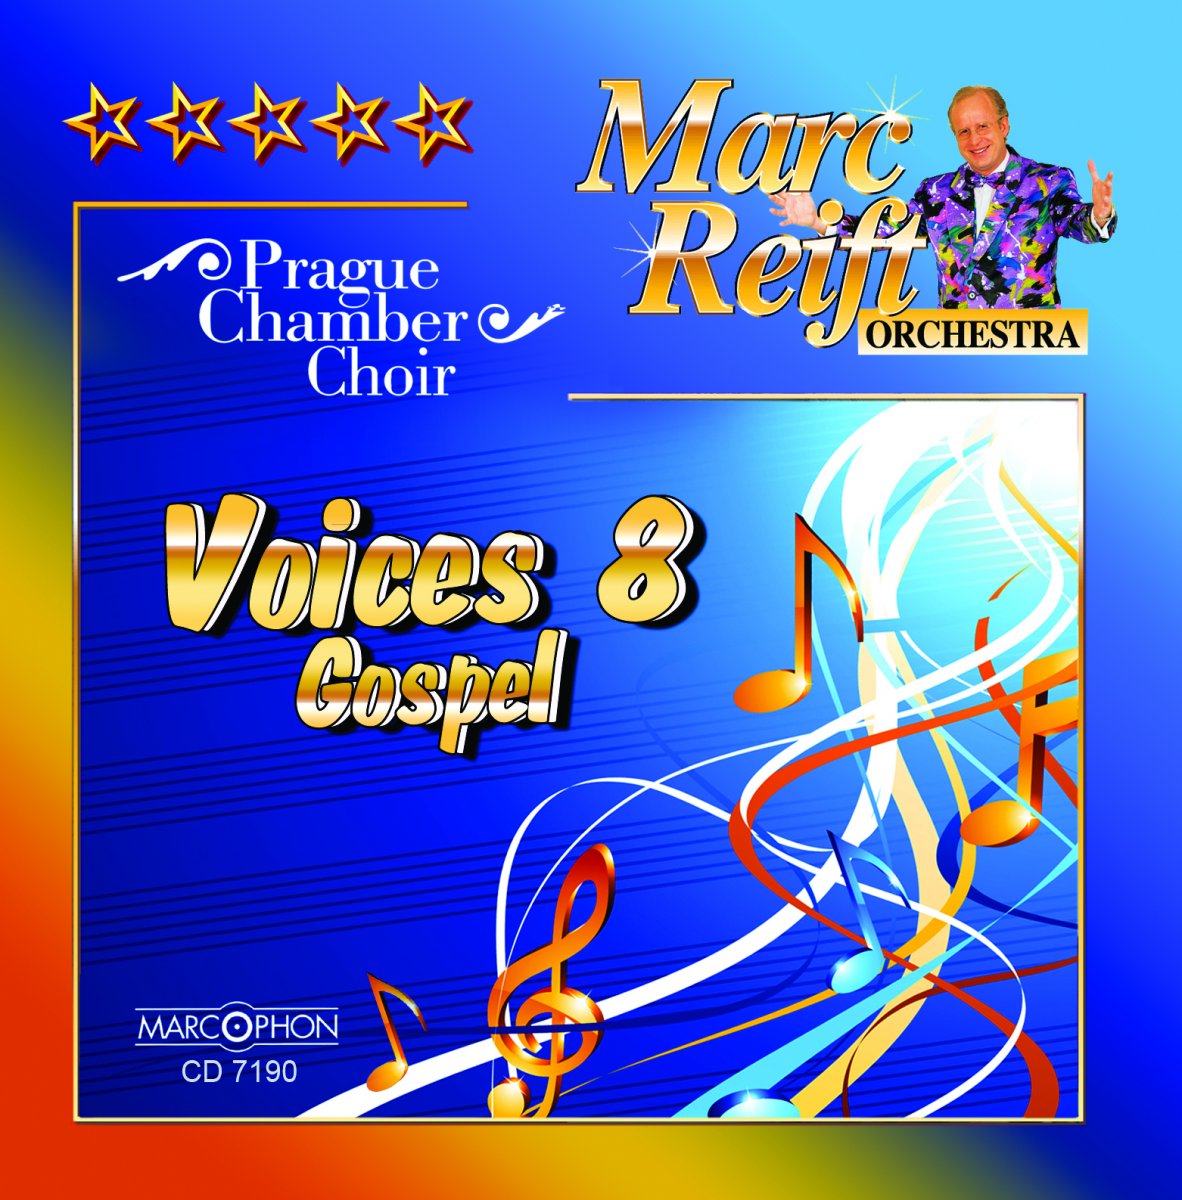 Voices #8 Gospel - click here